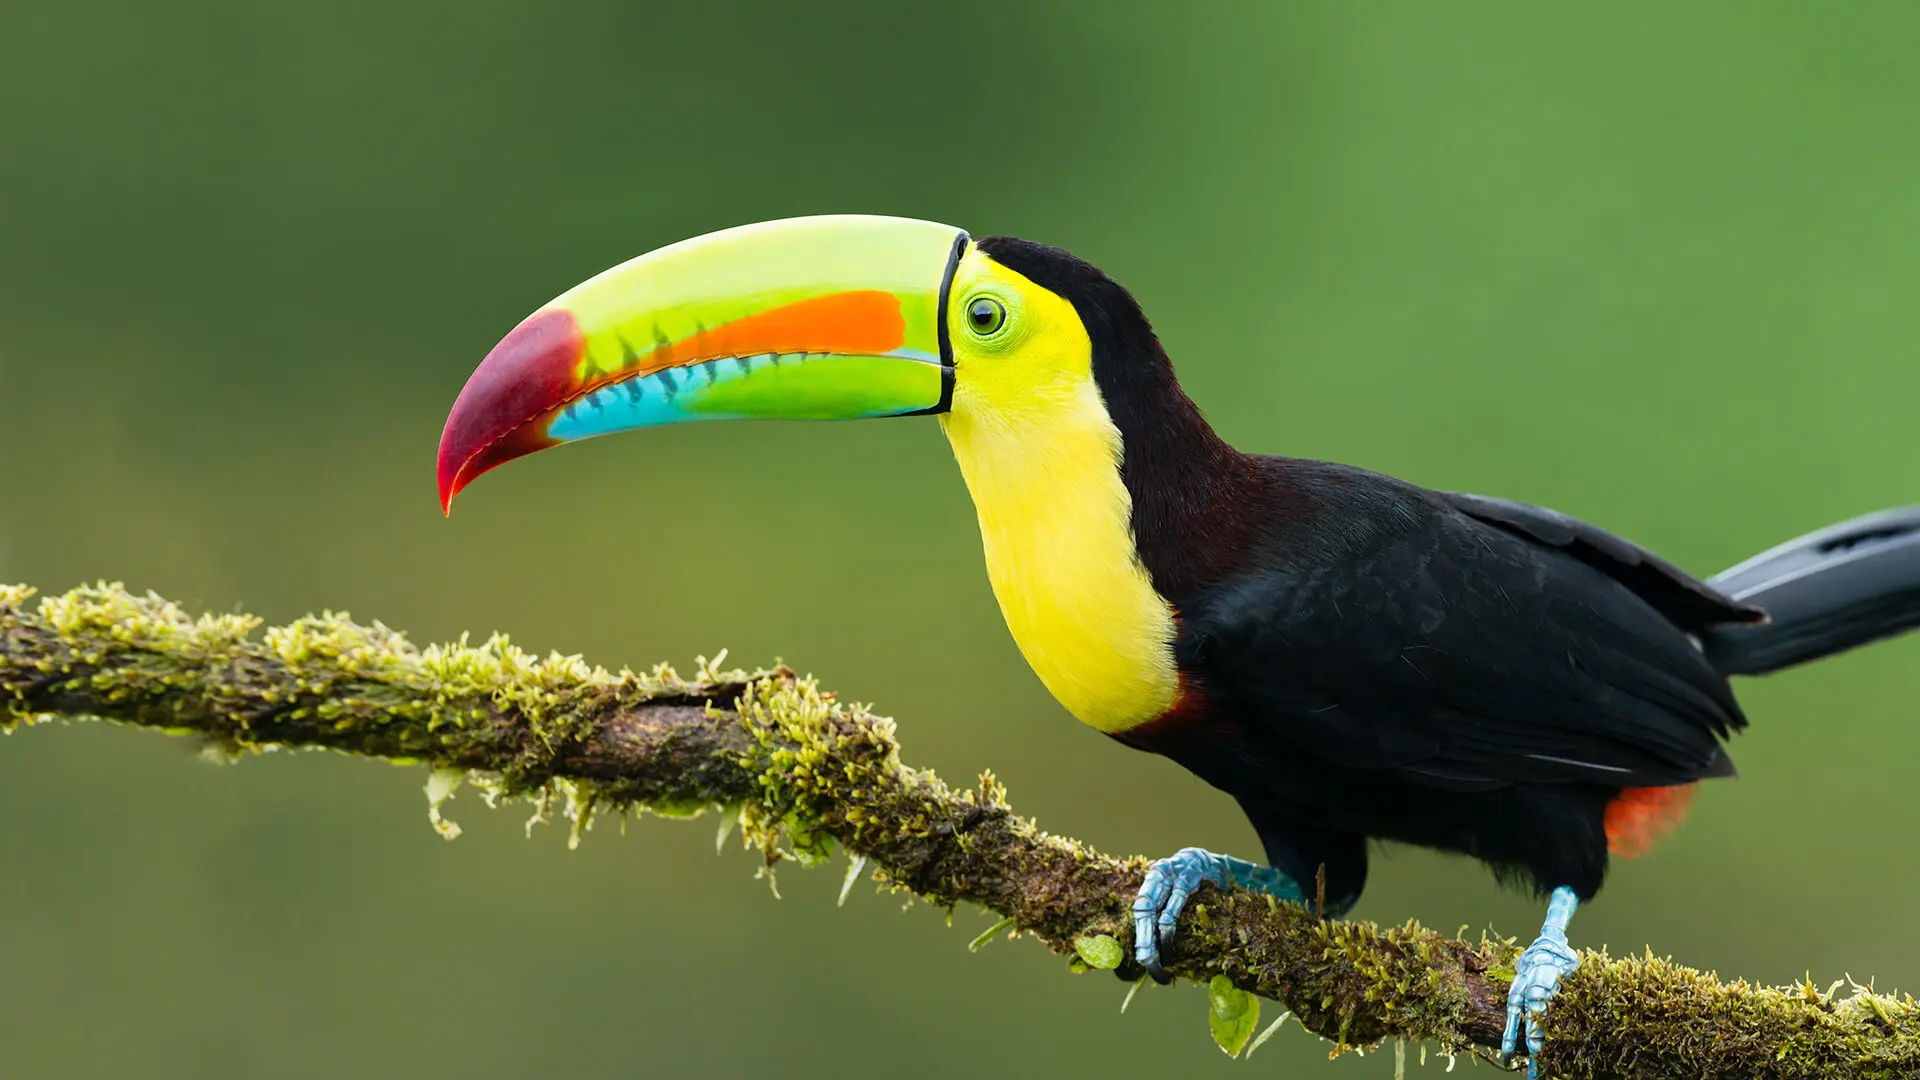 Amazing toucan facts, toucan facts, toucans facts, toucan lifespan, facts about toucans, interesting facts about toucans